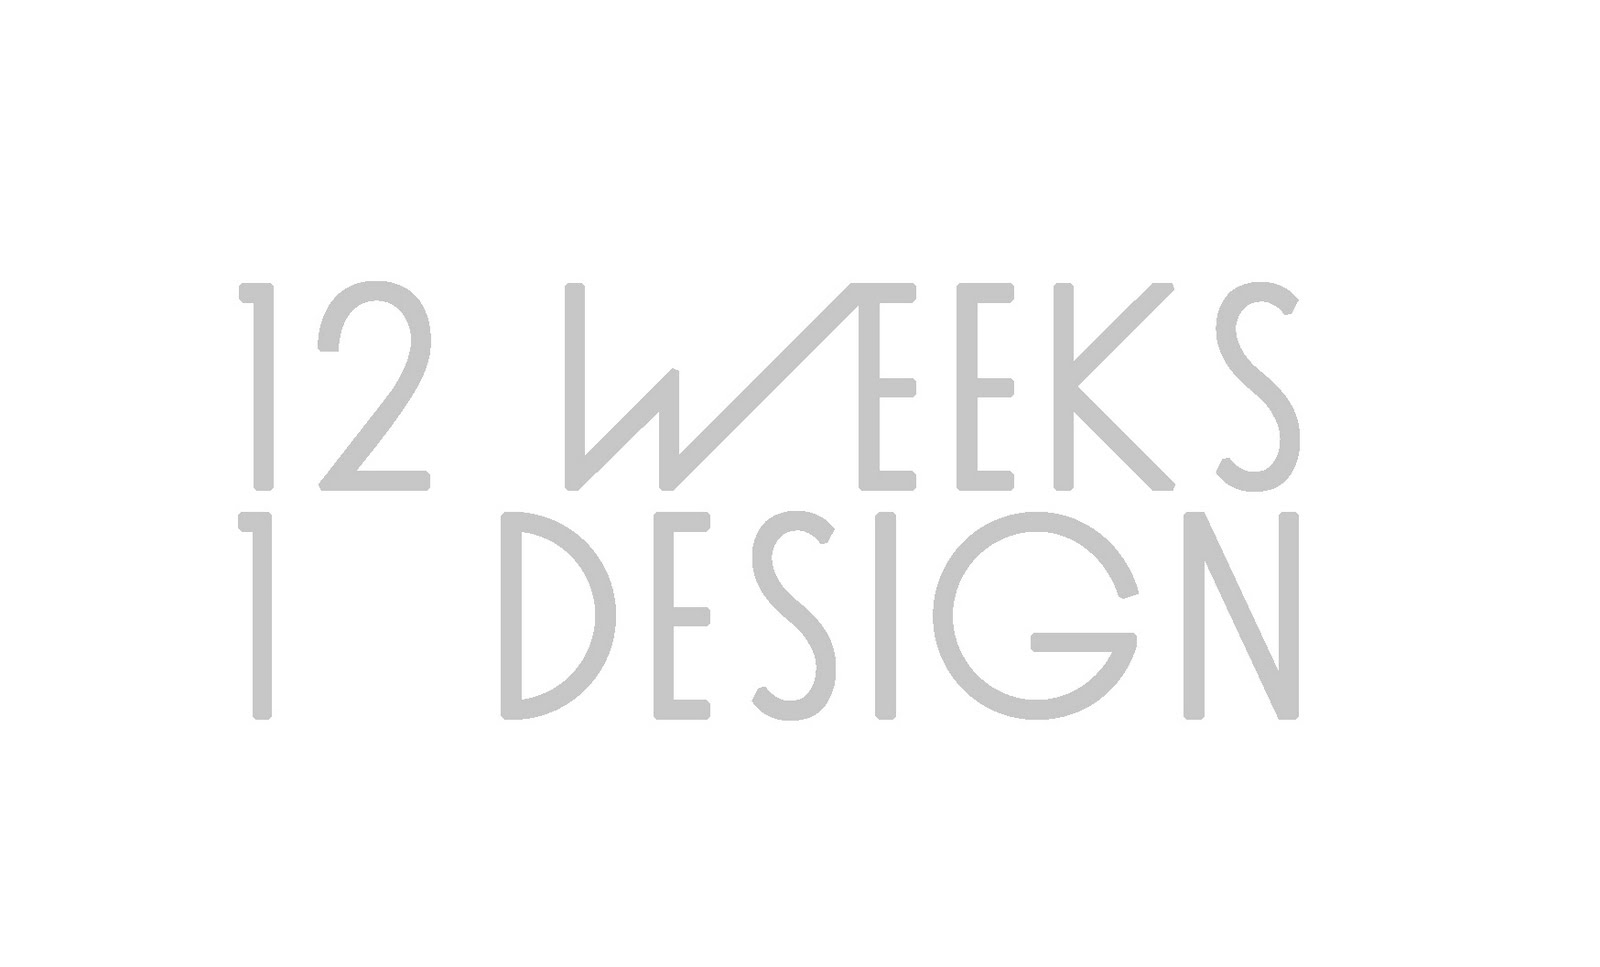 12 weeks 1 design